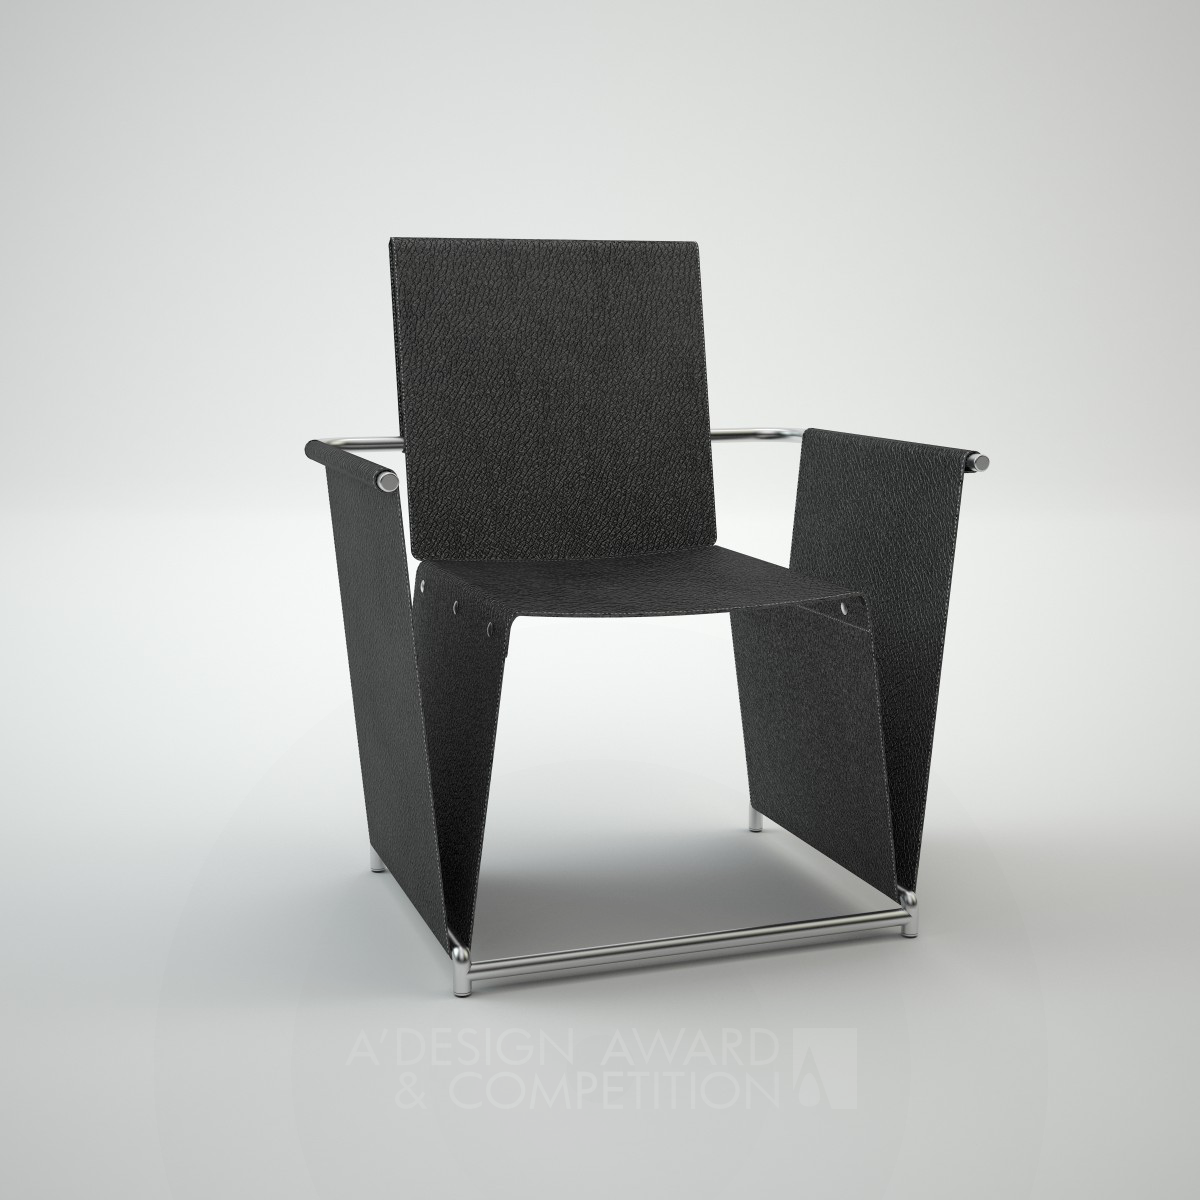 Wow Chair by Hakan Gürsu Bronze Furniture Design Award Winner 2012 